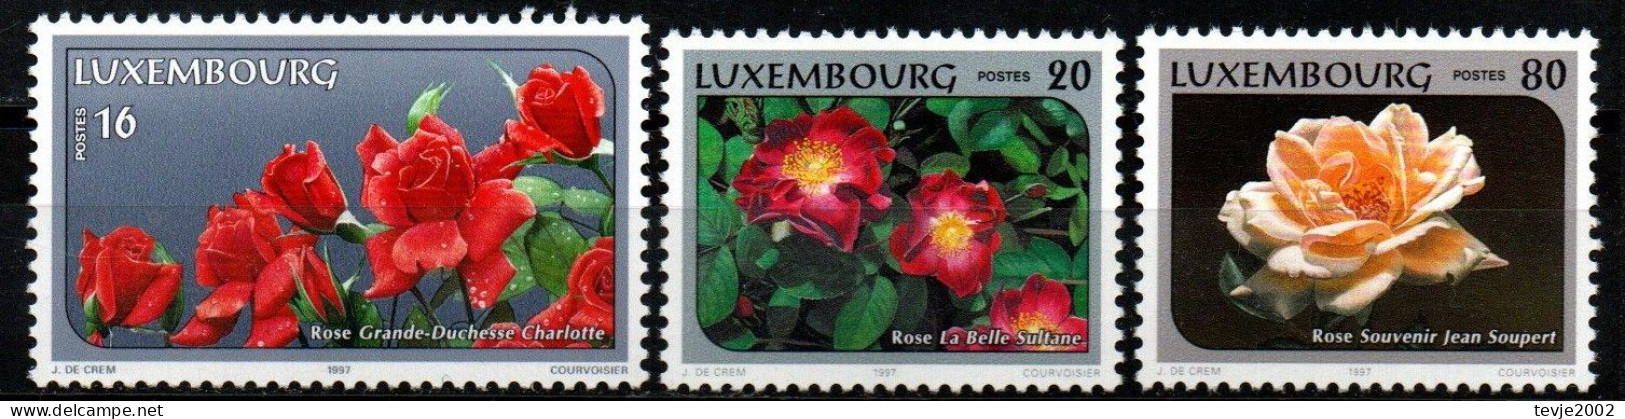 Luxemburg 1997 - Mi.Nr. 1411 - 1413 - Postfrisch MNH - Blumen Flowers Rosen Roses - Rosen